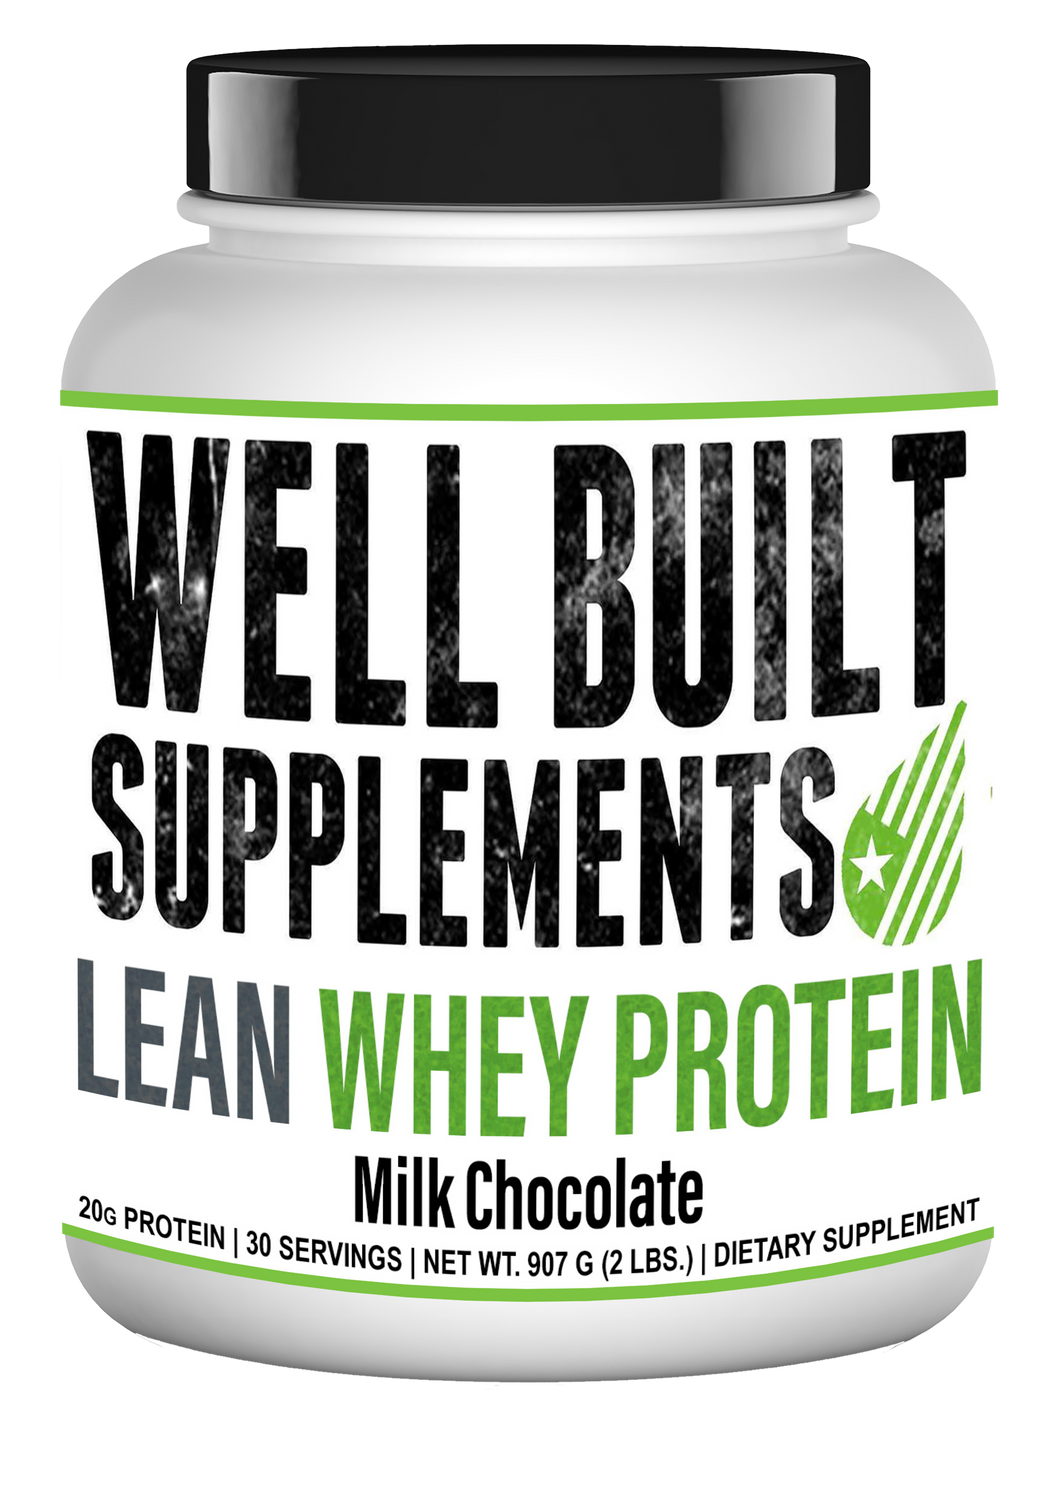 Lean Whey Protein